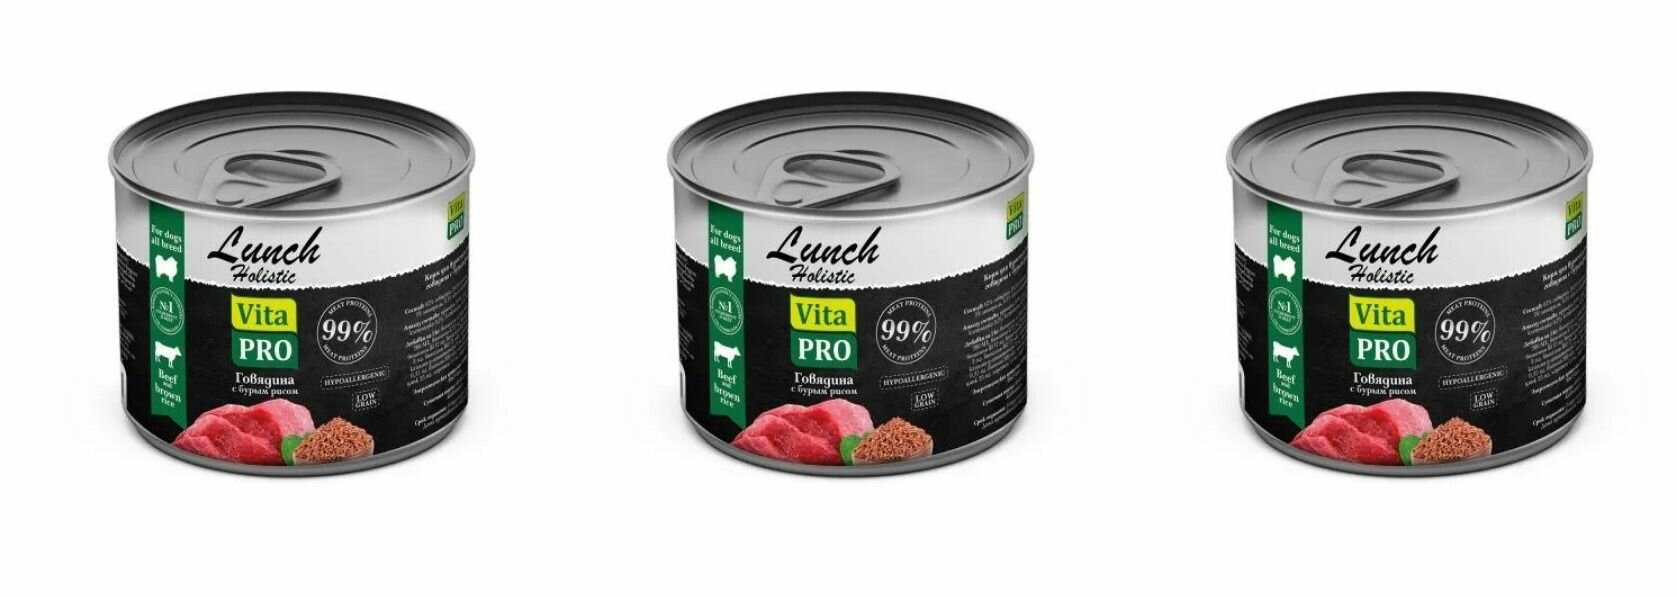 Vita Pro Консервы для собак говядина с бурым рисом Lunch 240 г  3 шт